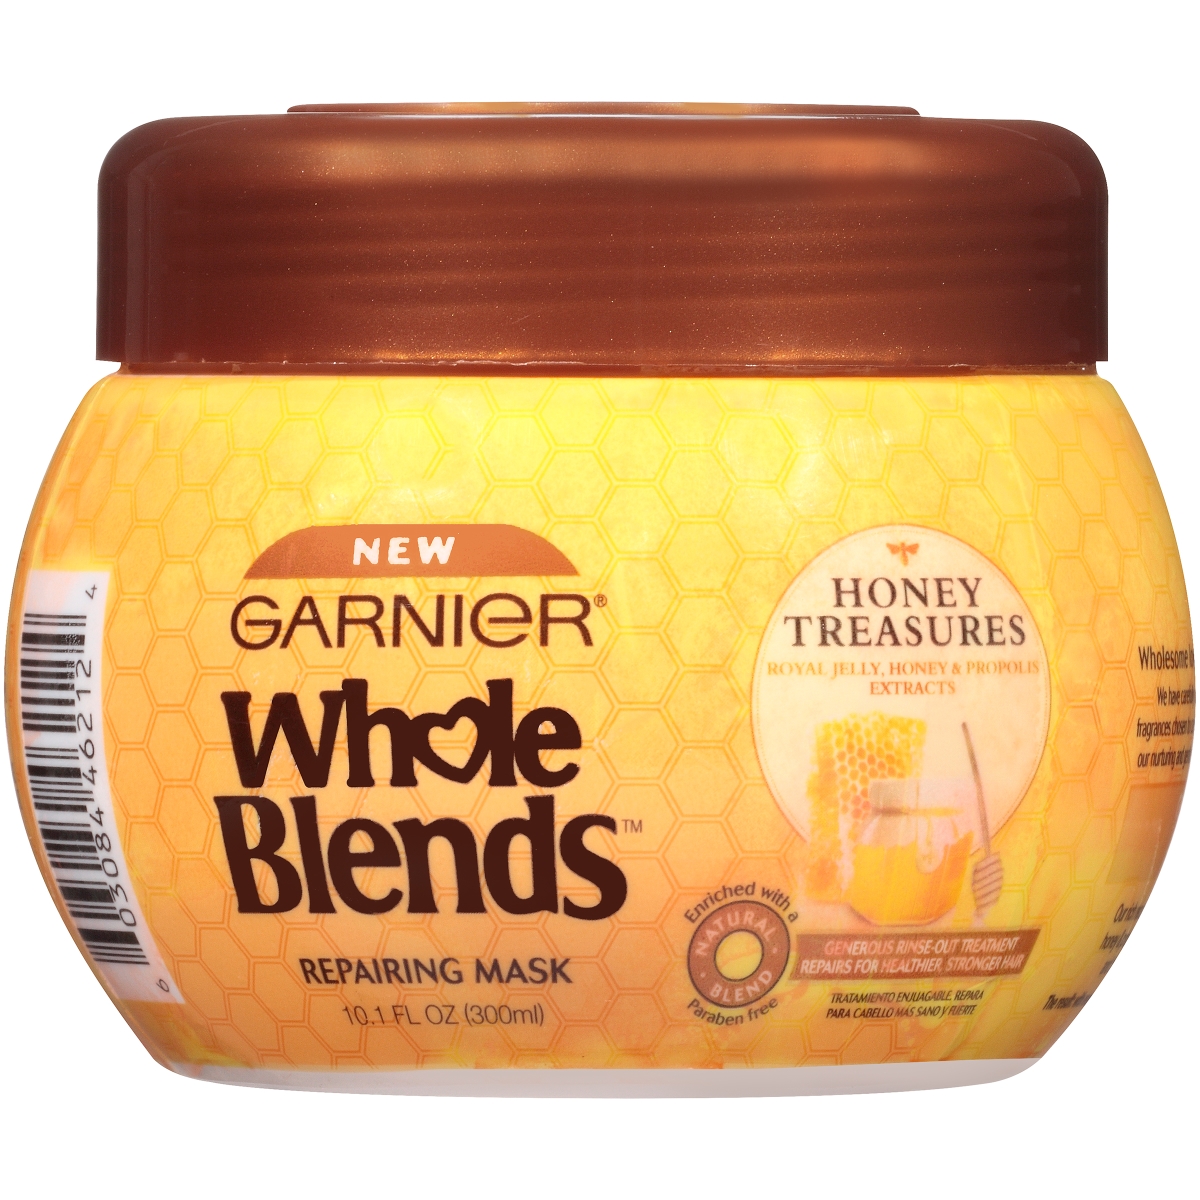 Garnier 1093088 10.1 Oz Whole Blends Mask With Honey Treasures